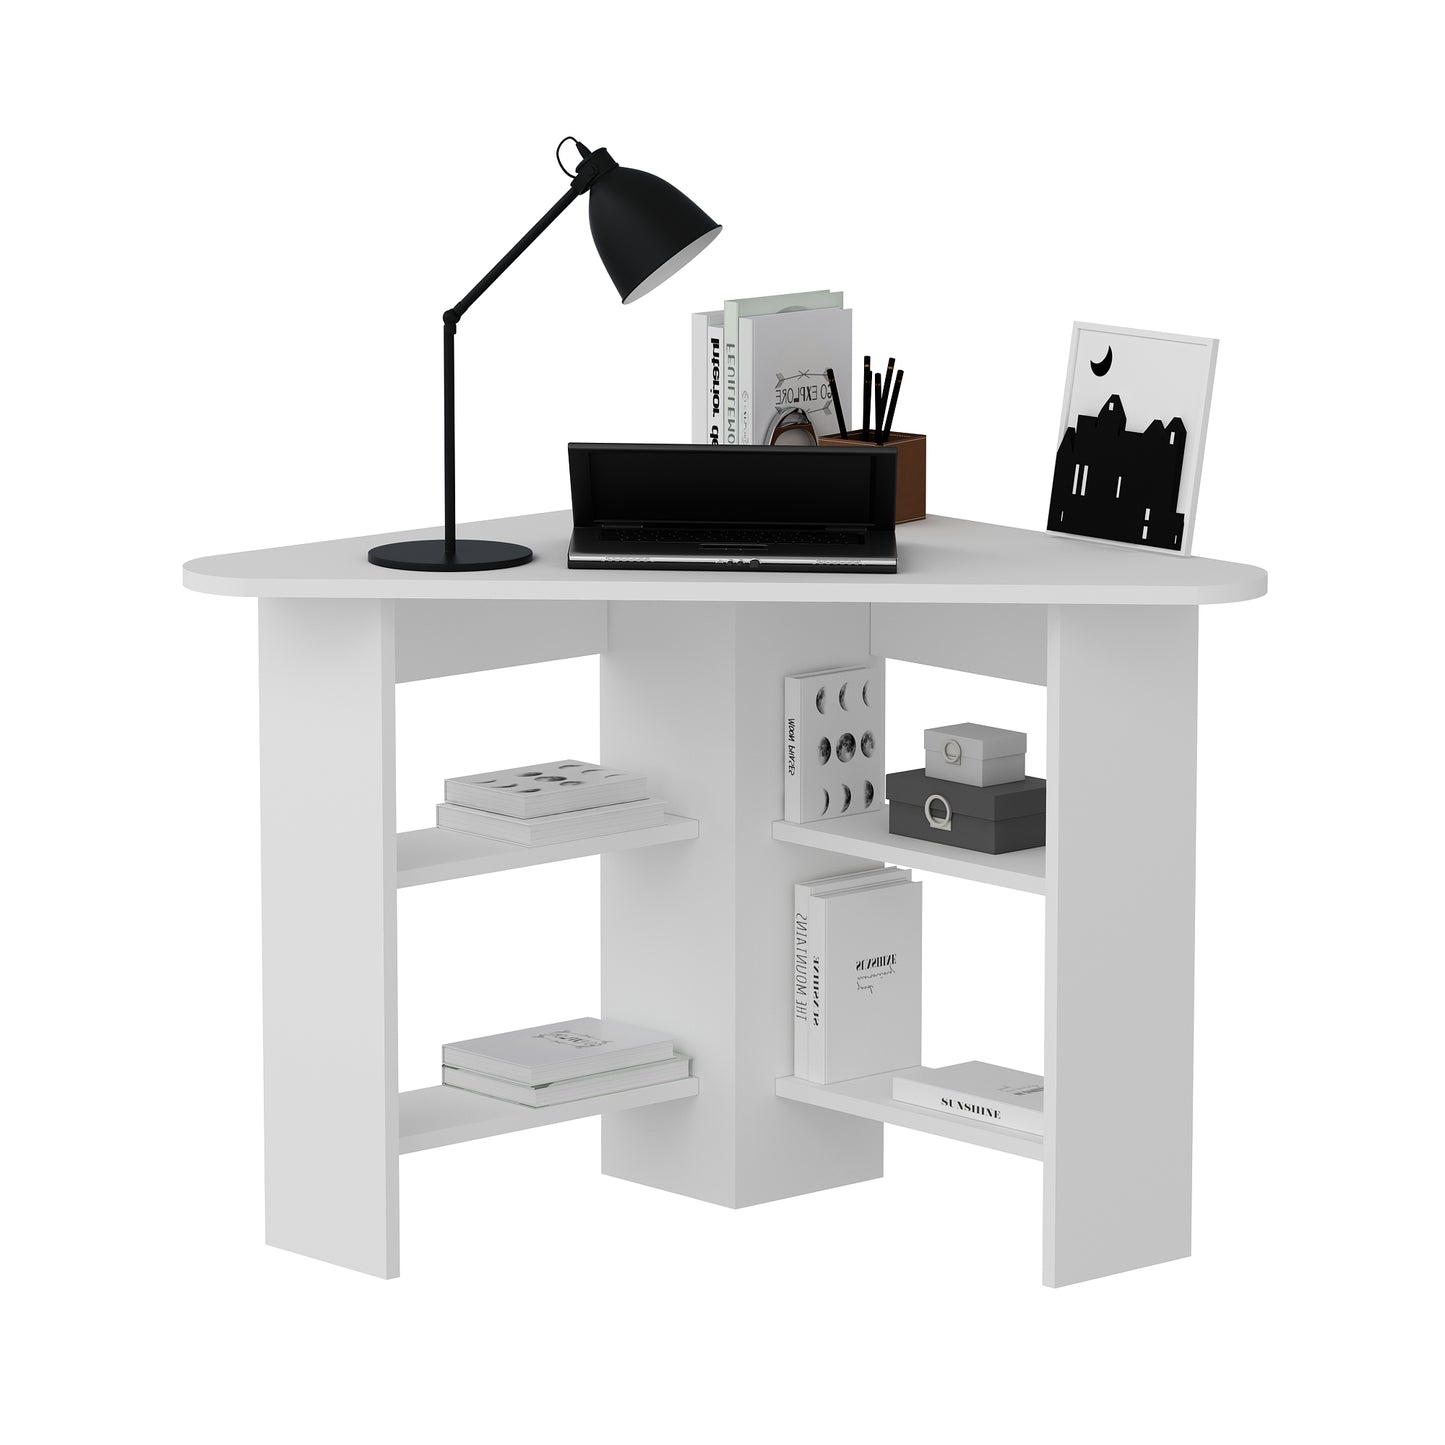 Gredos Computer Desk with Shelves